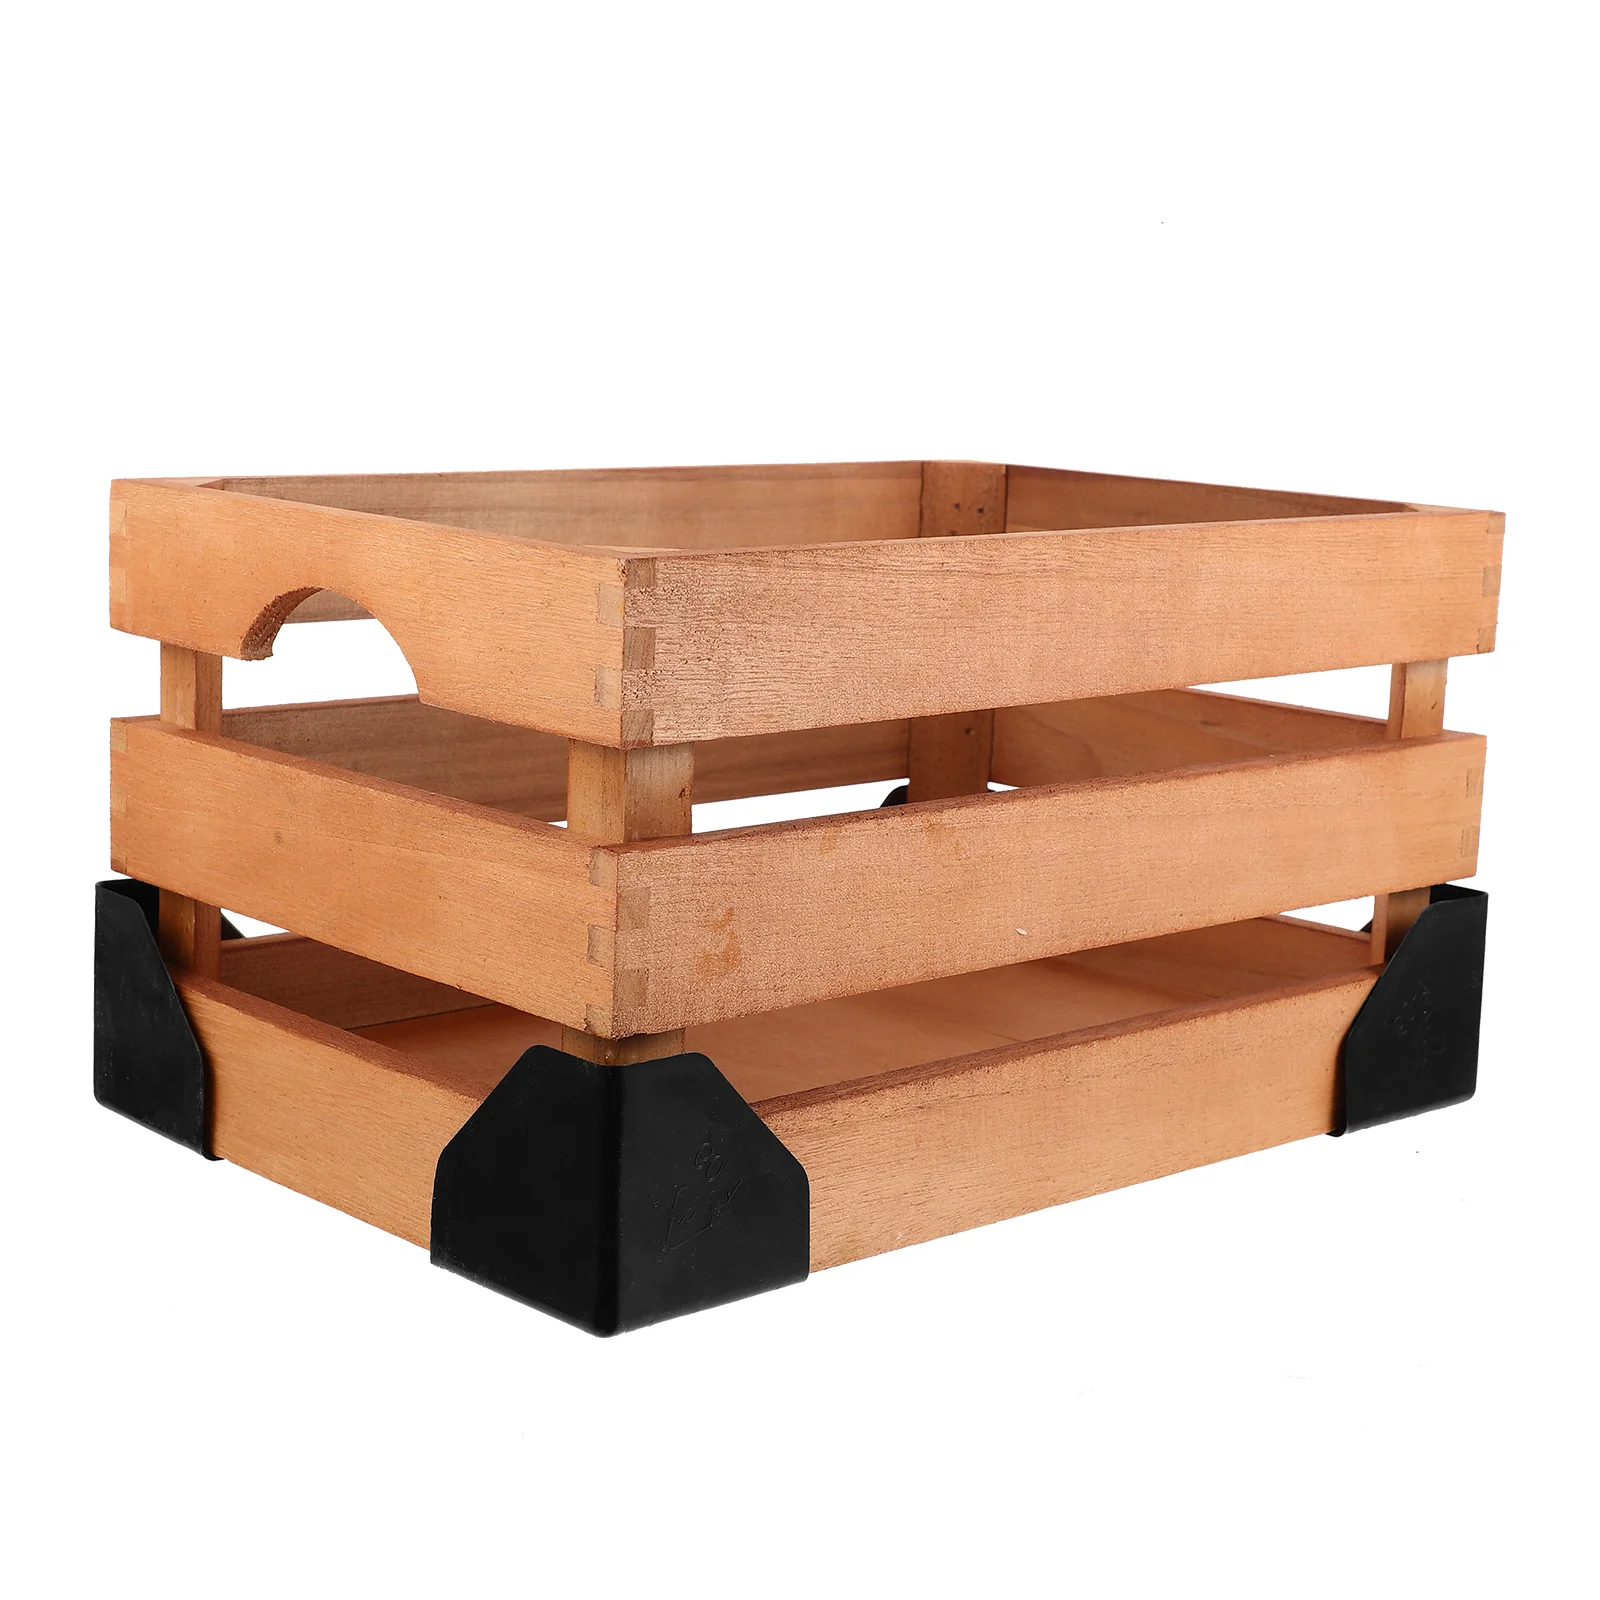 

Storage Baskets For Shelves Dirty Organizer Toy Fruit Wooden Household Holder Sundries Child Baskets Shelves